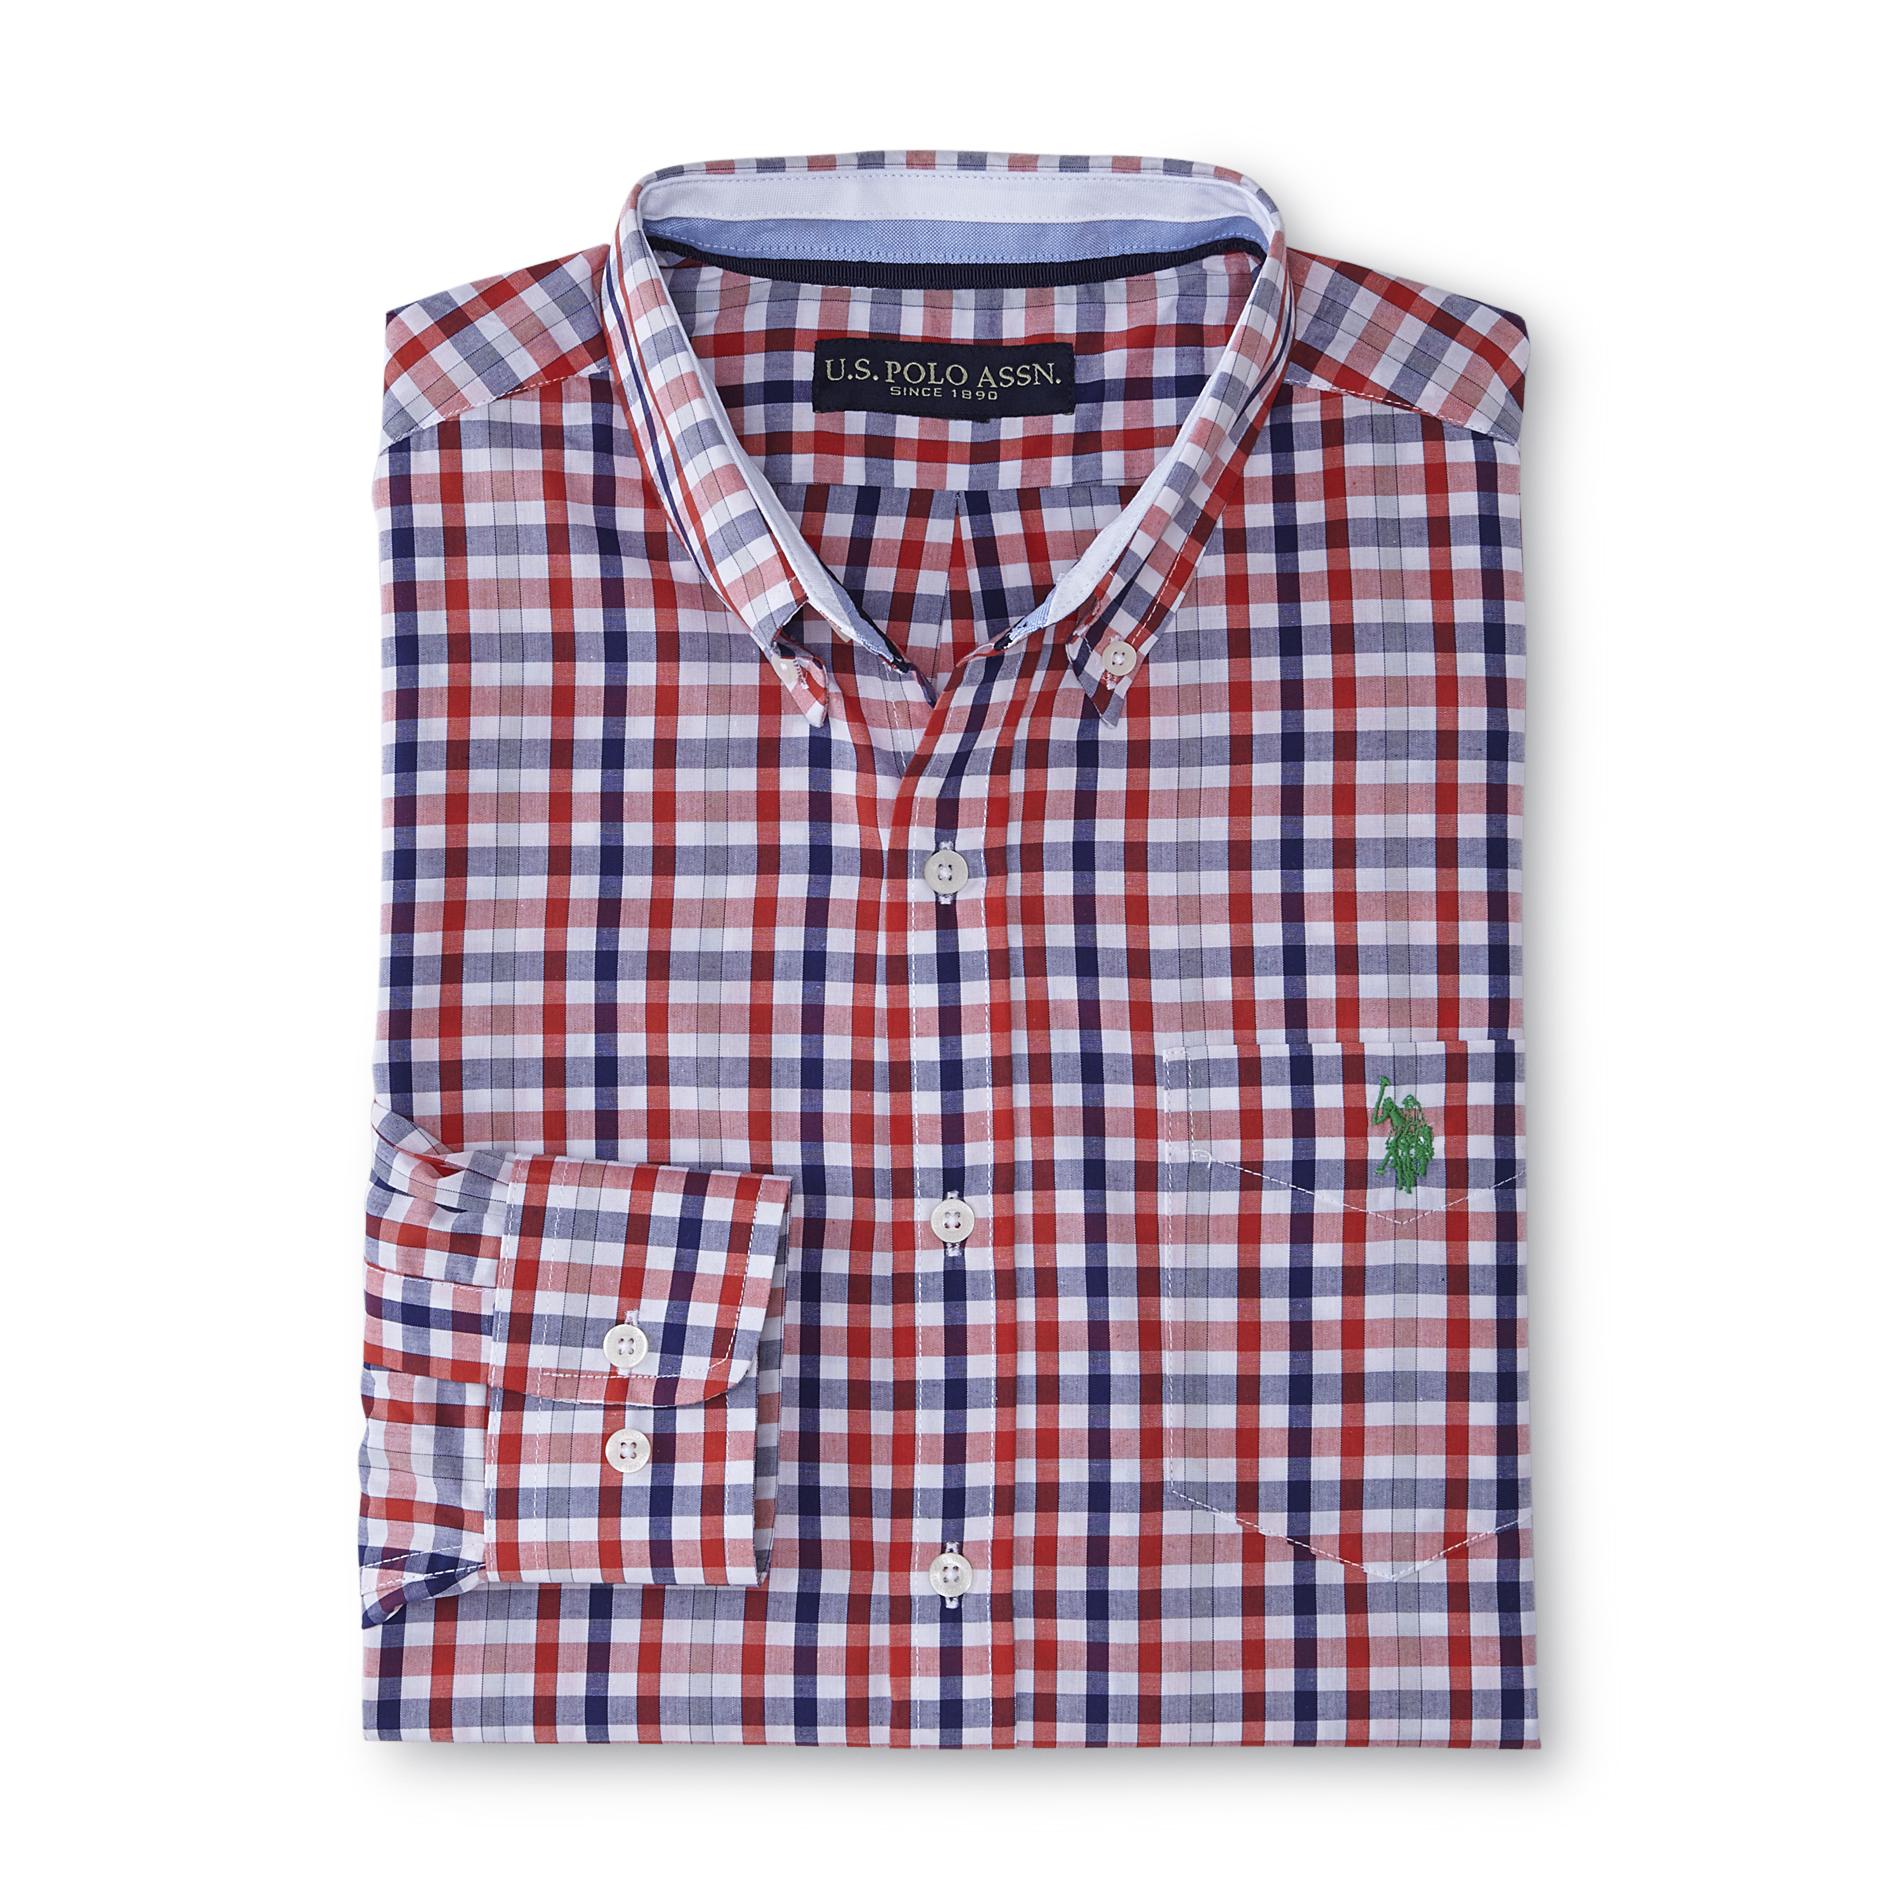 U.S. Polo Assn. Men's Button-Front Shirt - Gingham Plaid